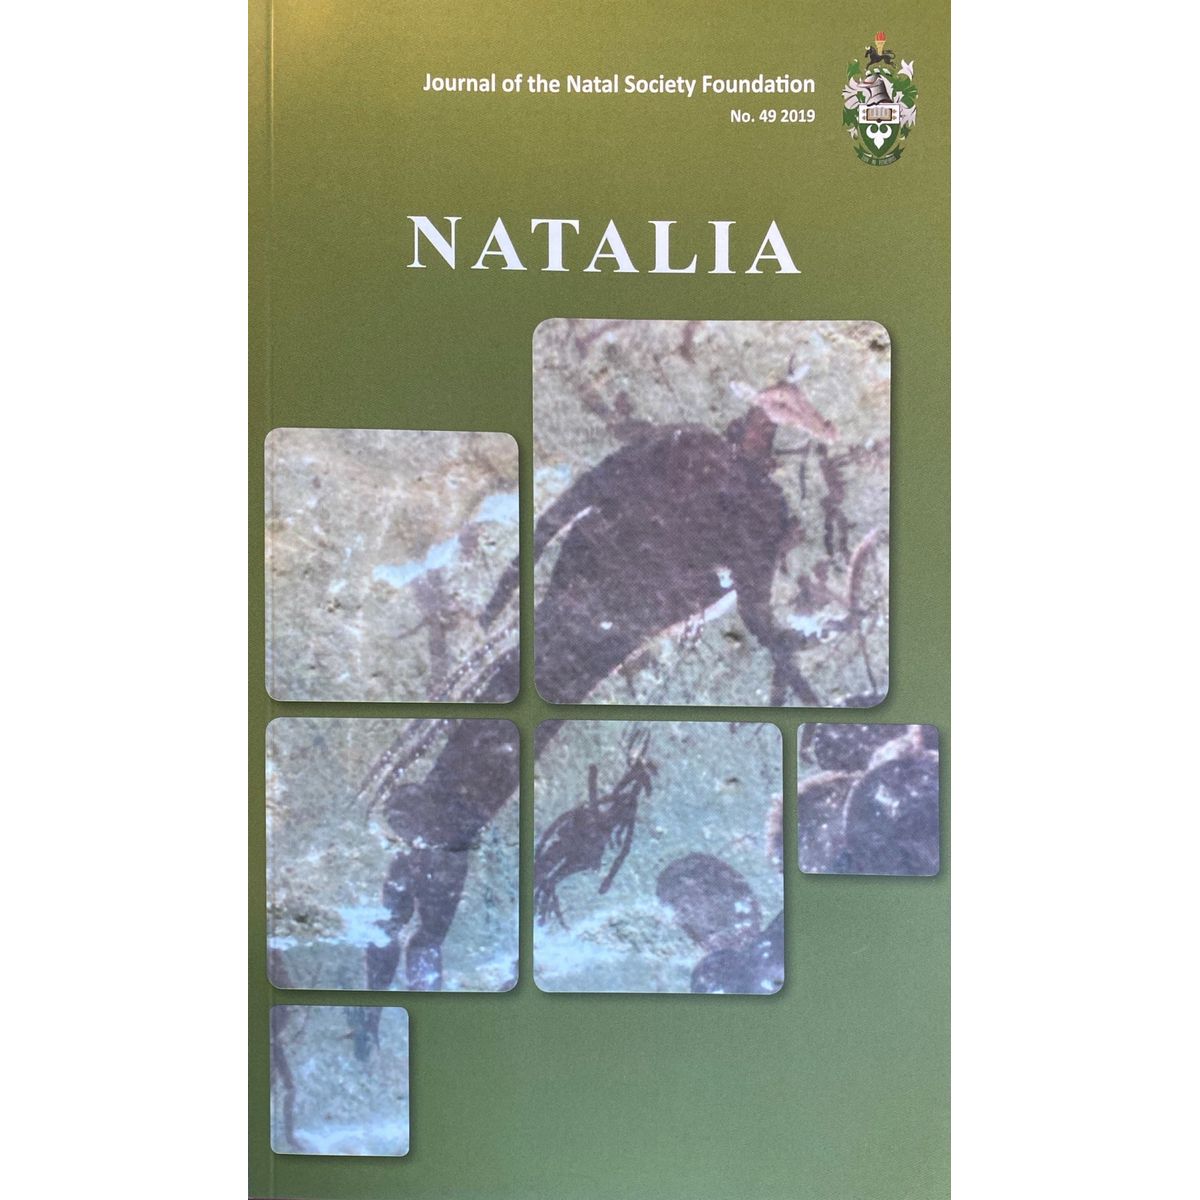 Natalia: Journal of the Natal Society Foundation No. 49 [2019]